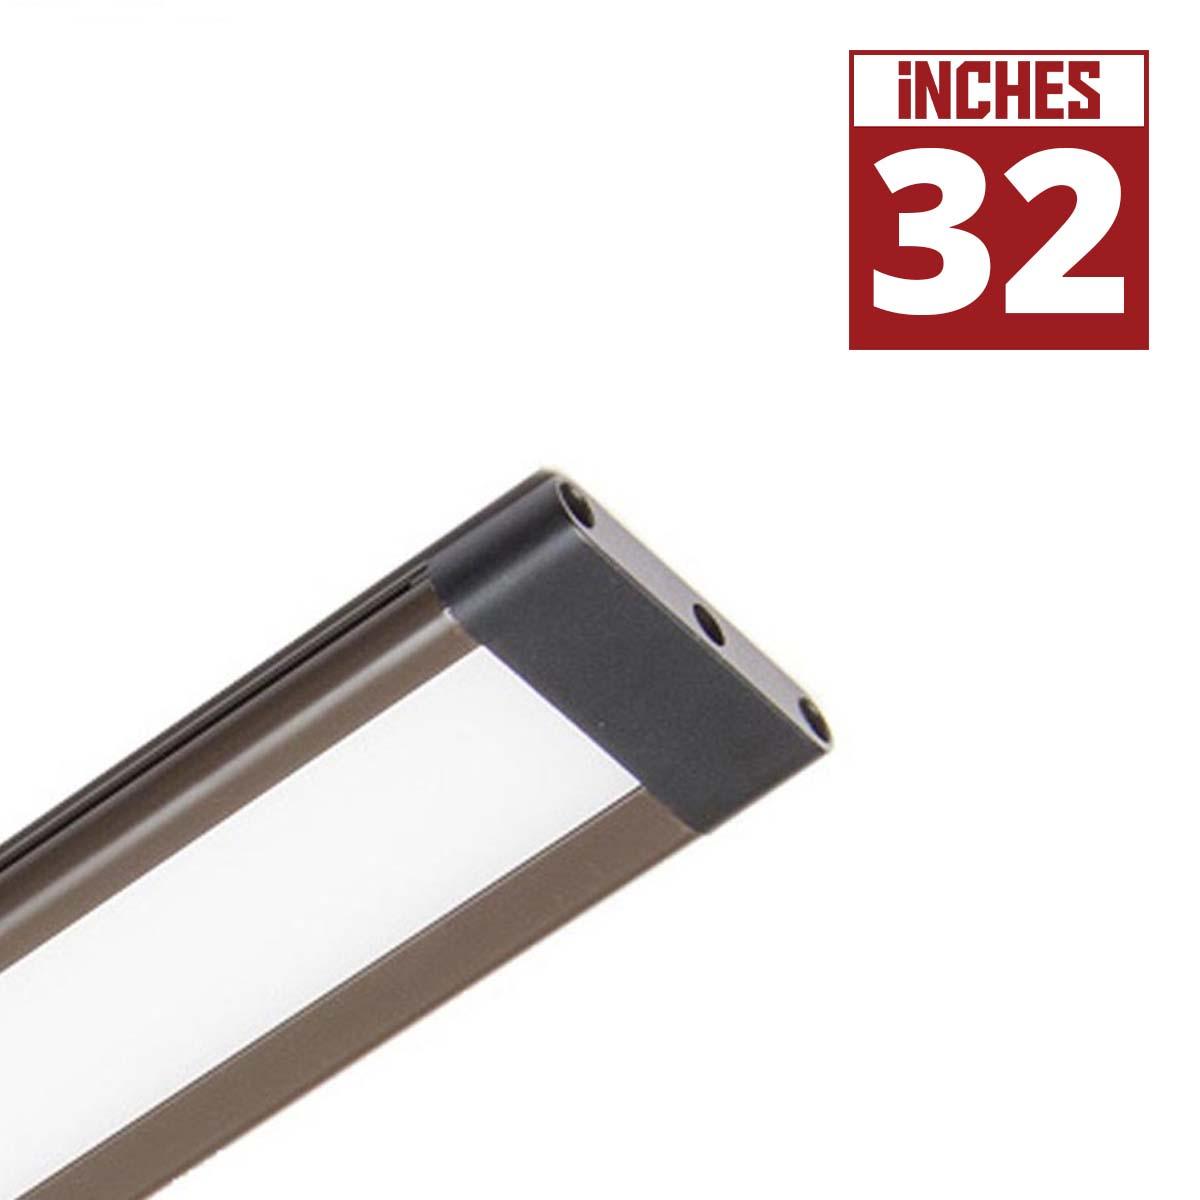 SlimEdge 32 Inch Plug In Under Cabinet LED Light, 750 Lumens, Linkable, 24V - Bees Lighting